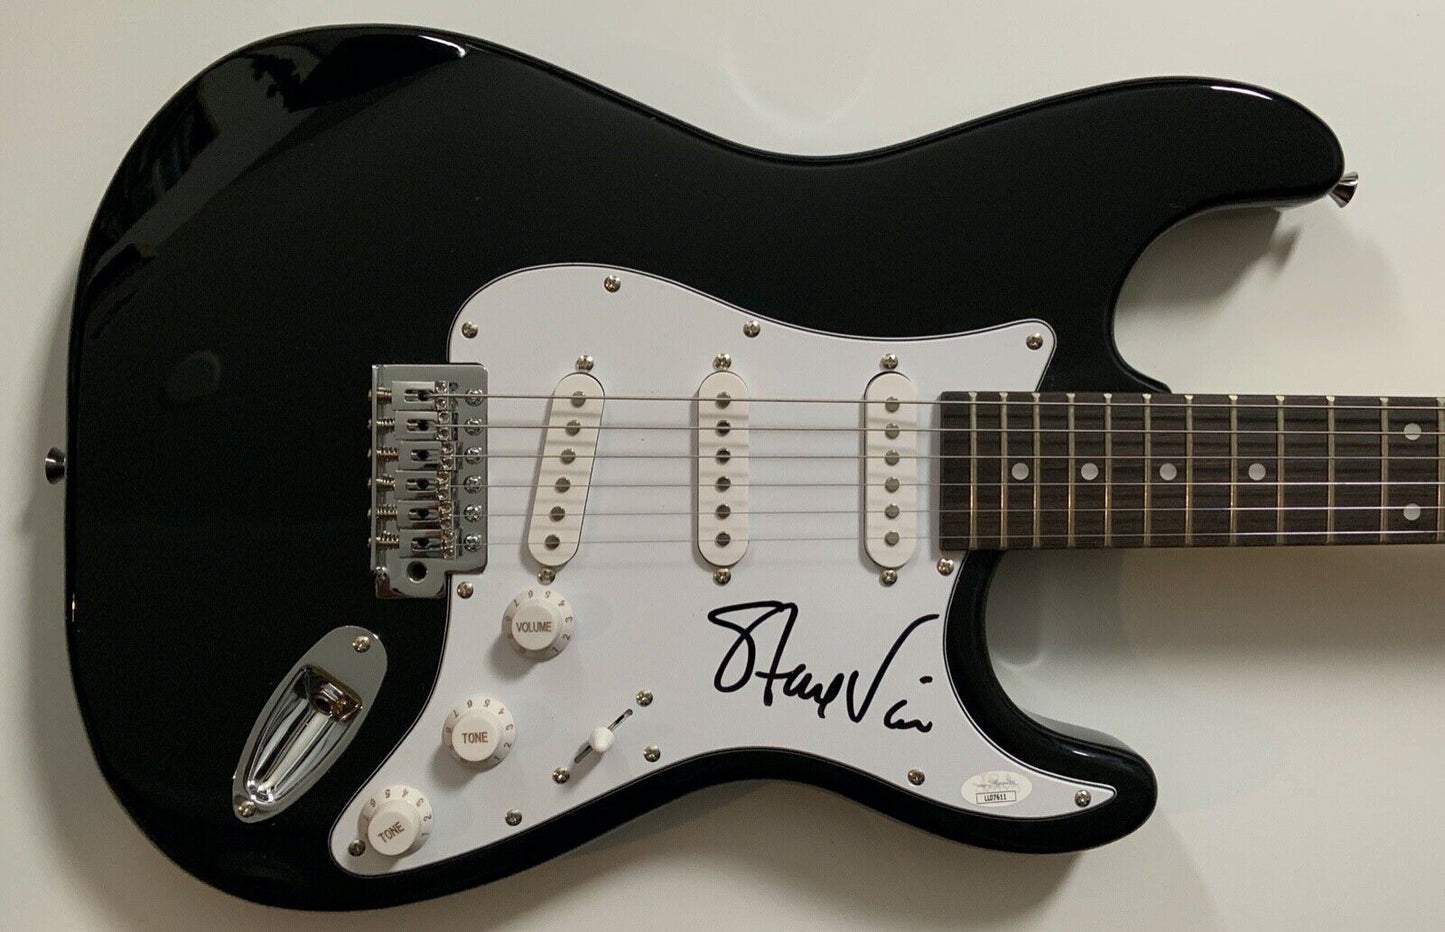 Steve Vai JSA Autograph Signed Guitar Stratocaster